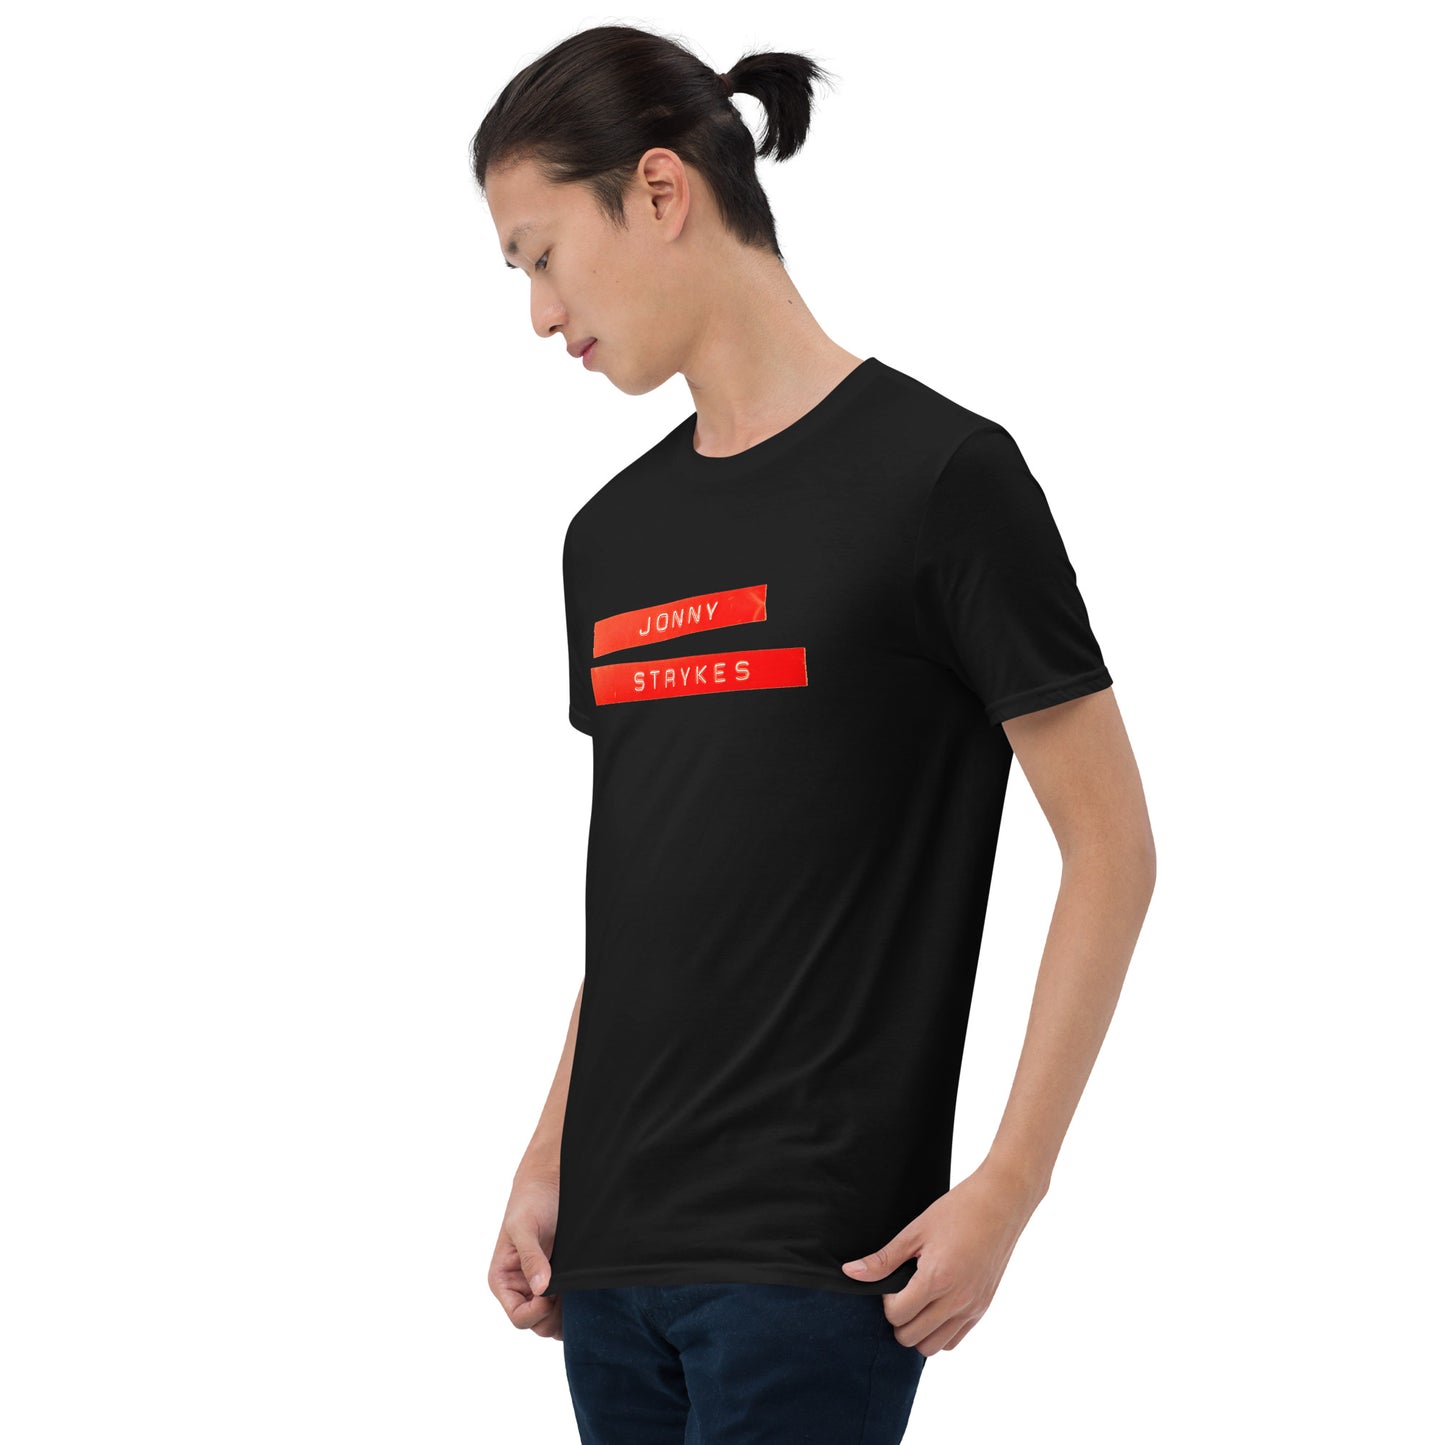 Jonny Strykes - Unisex Short Sleeve T-Shirt